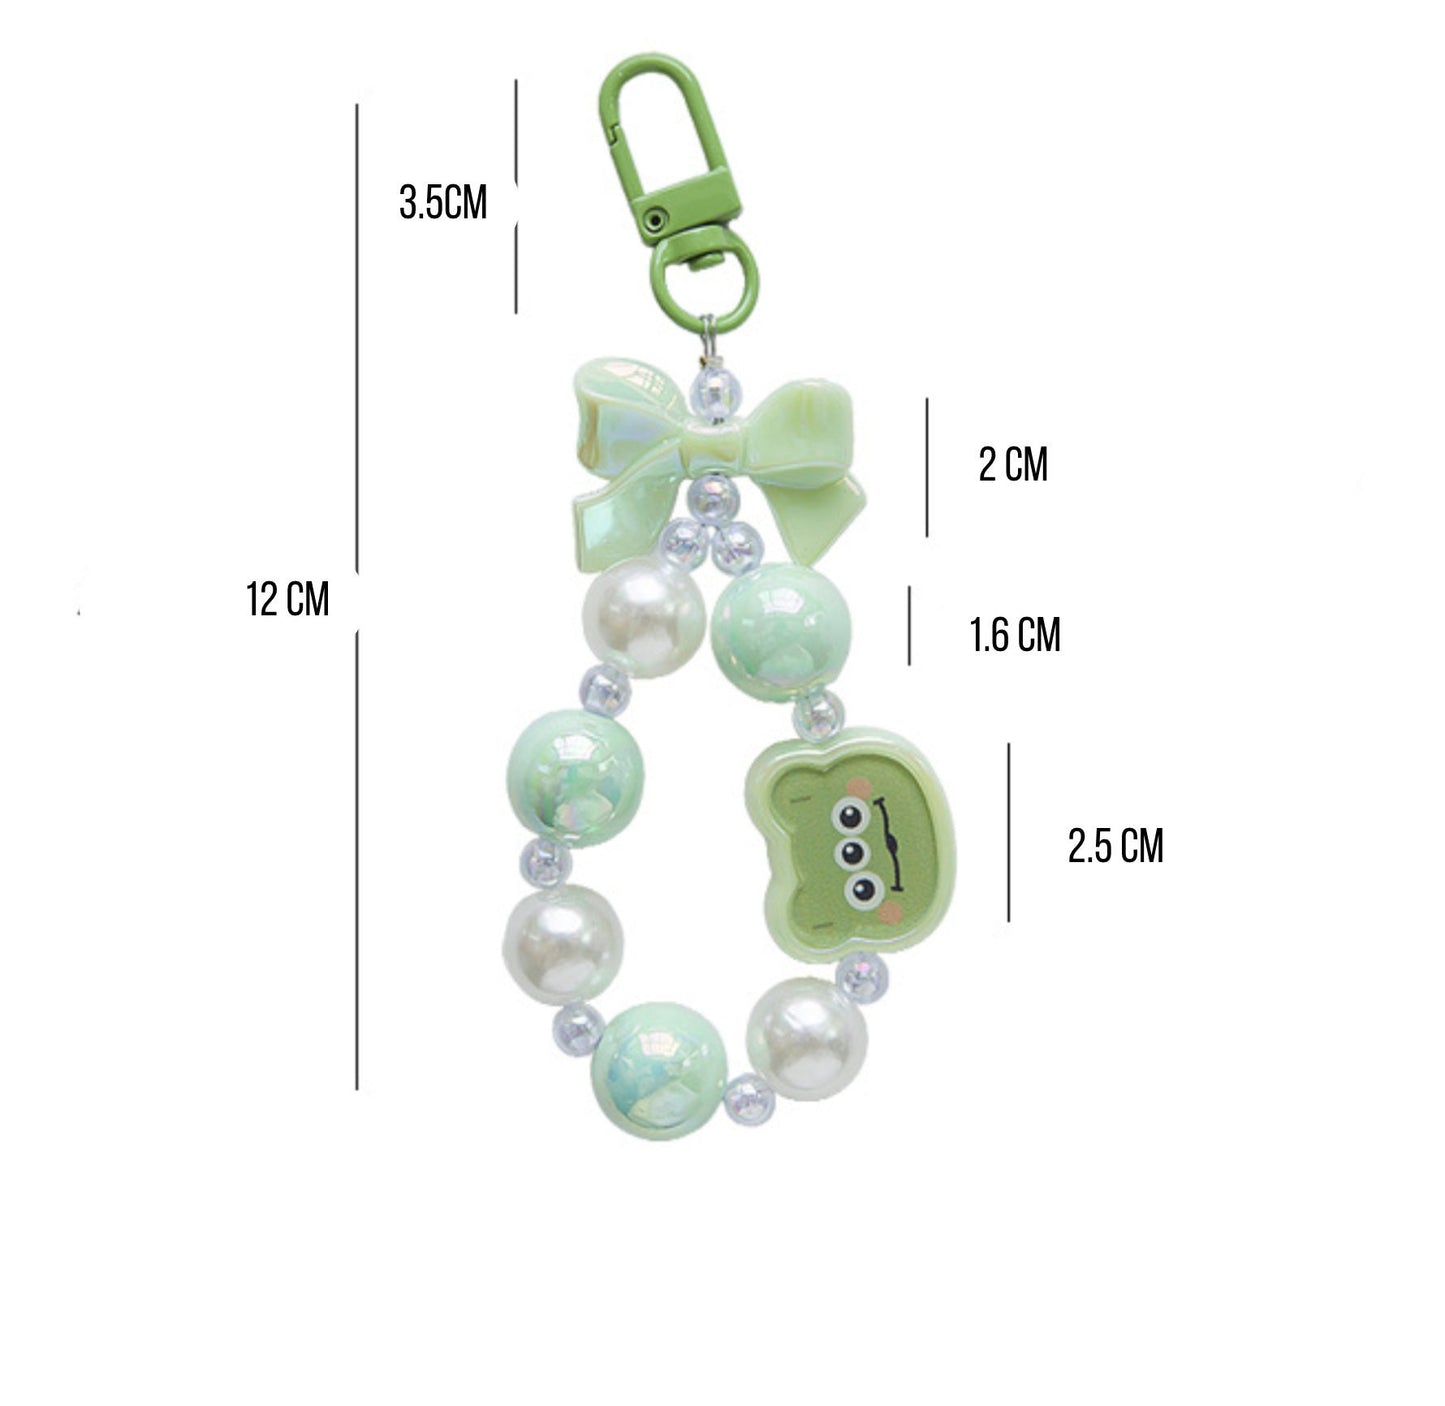 Cute Acrylic Animal Themed Charm Bead Strand Keychain, Key ring